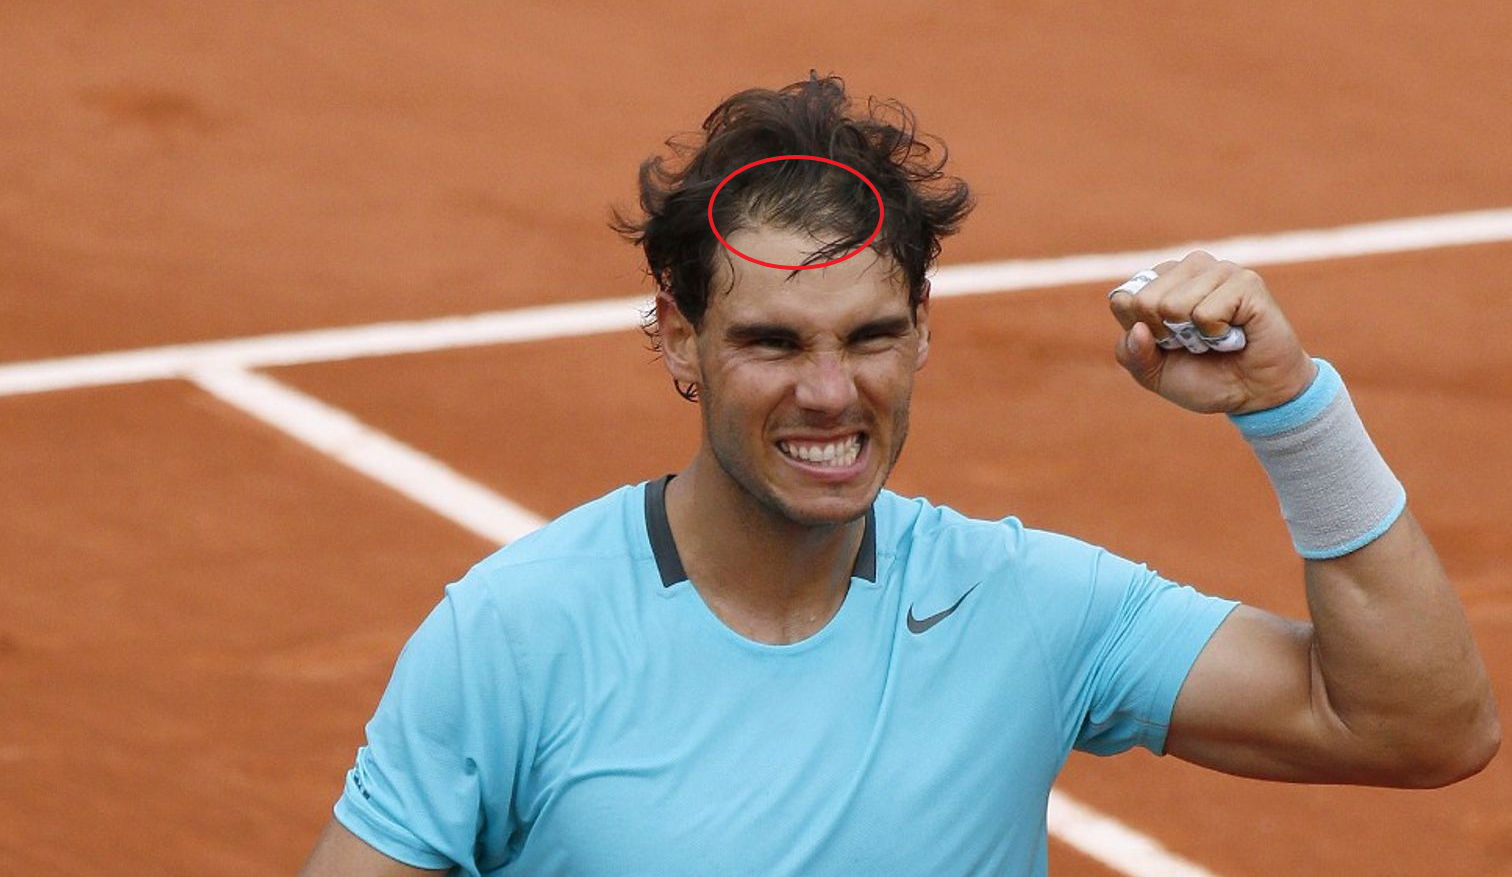 Nadal's m-shaped hairline